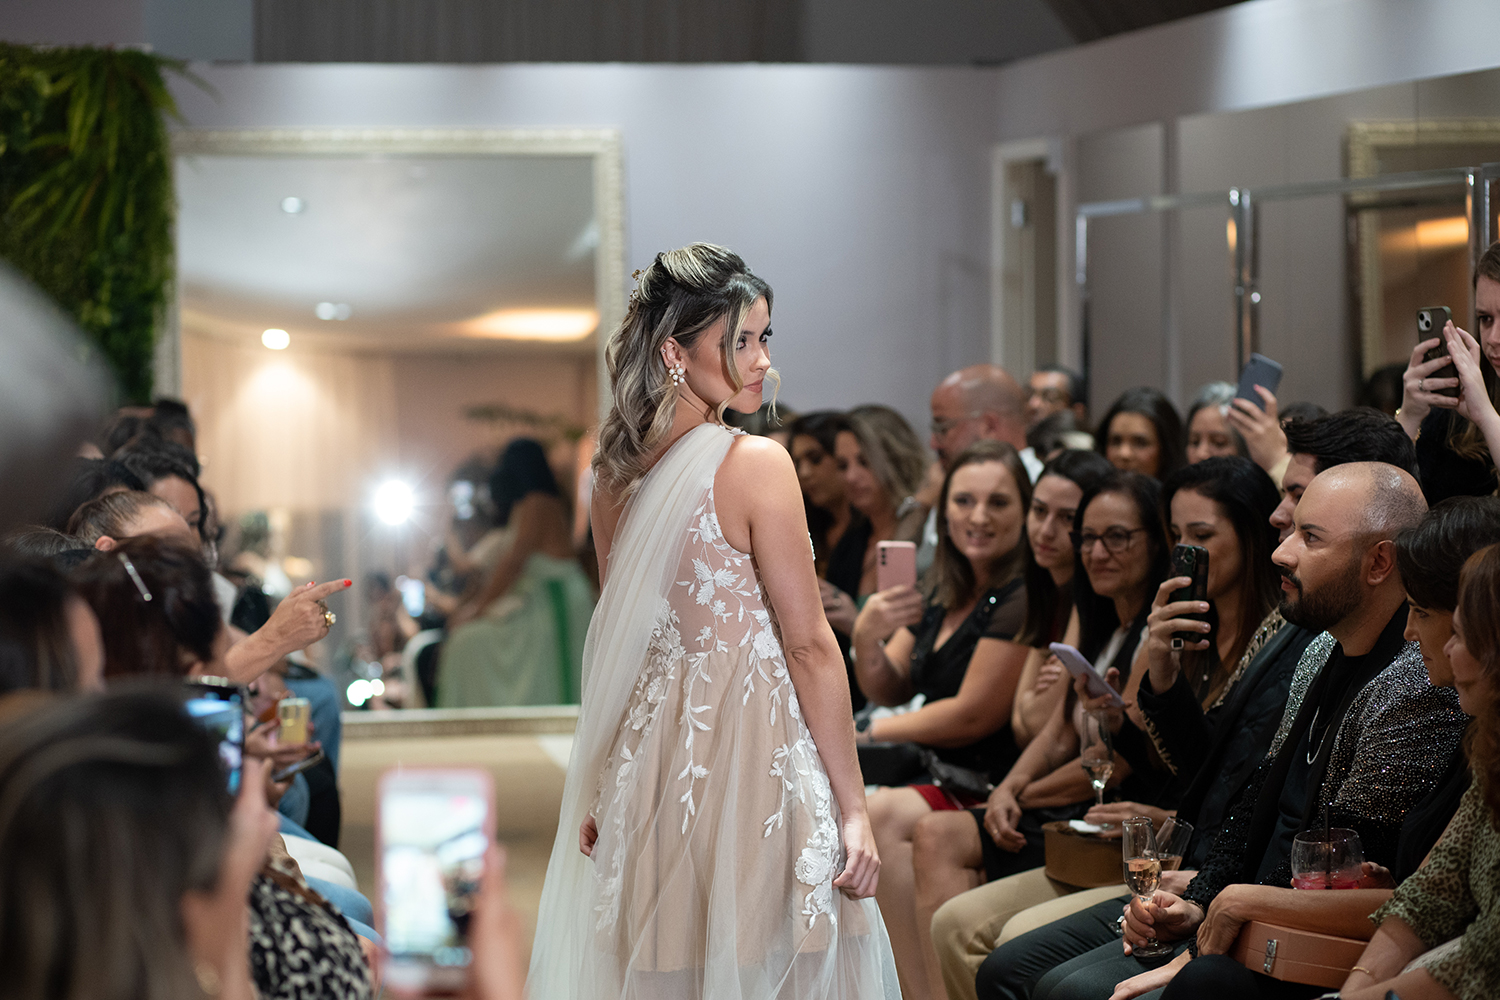 Realizze | Vestidos de Noiva Atelier Nathalia Marques